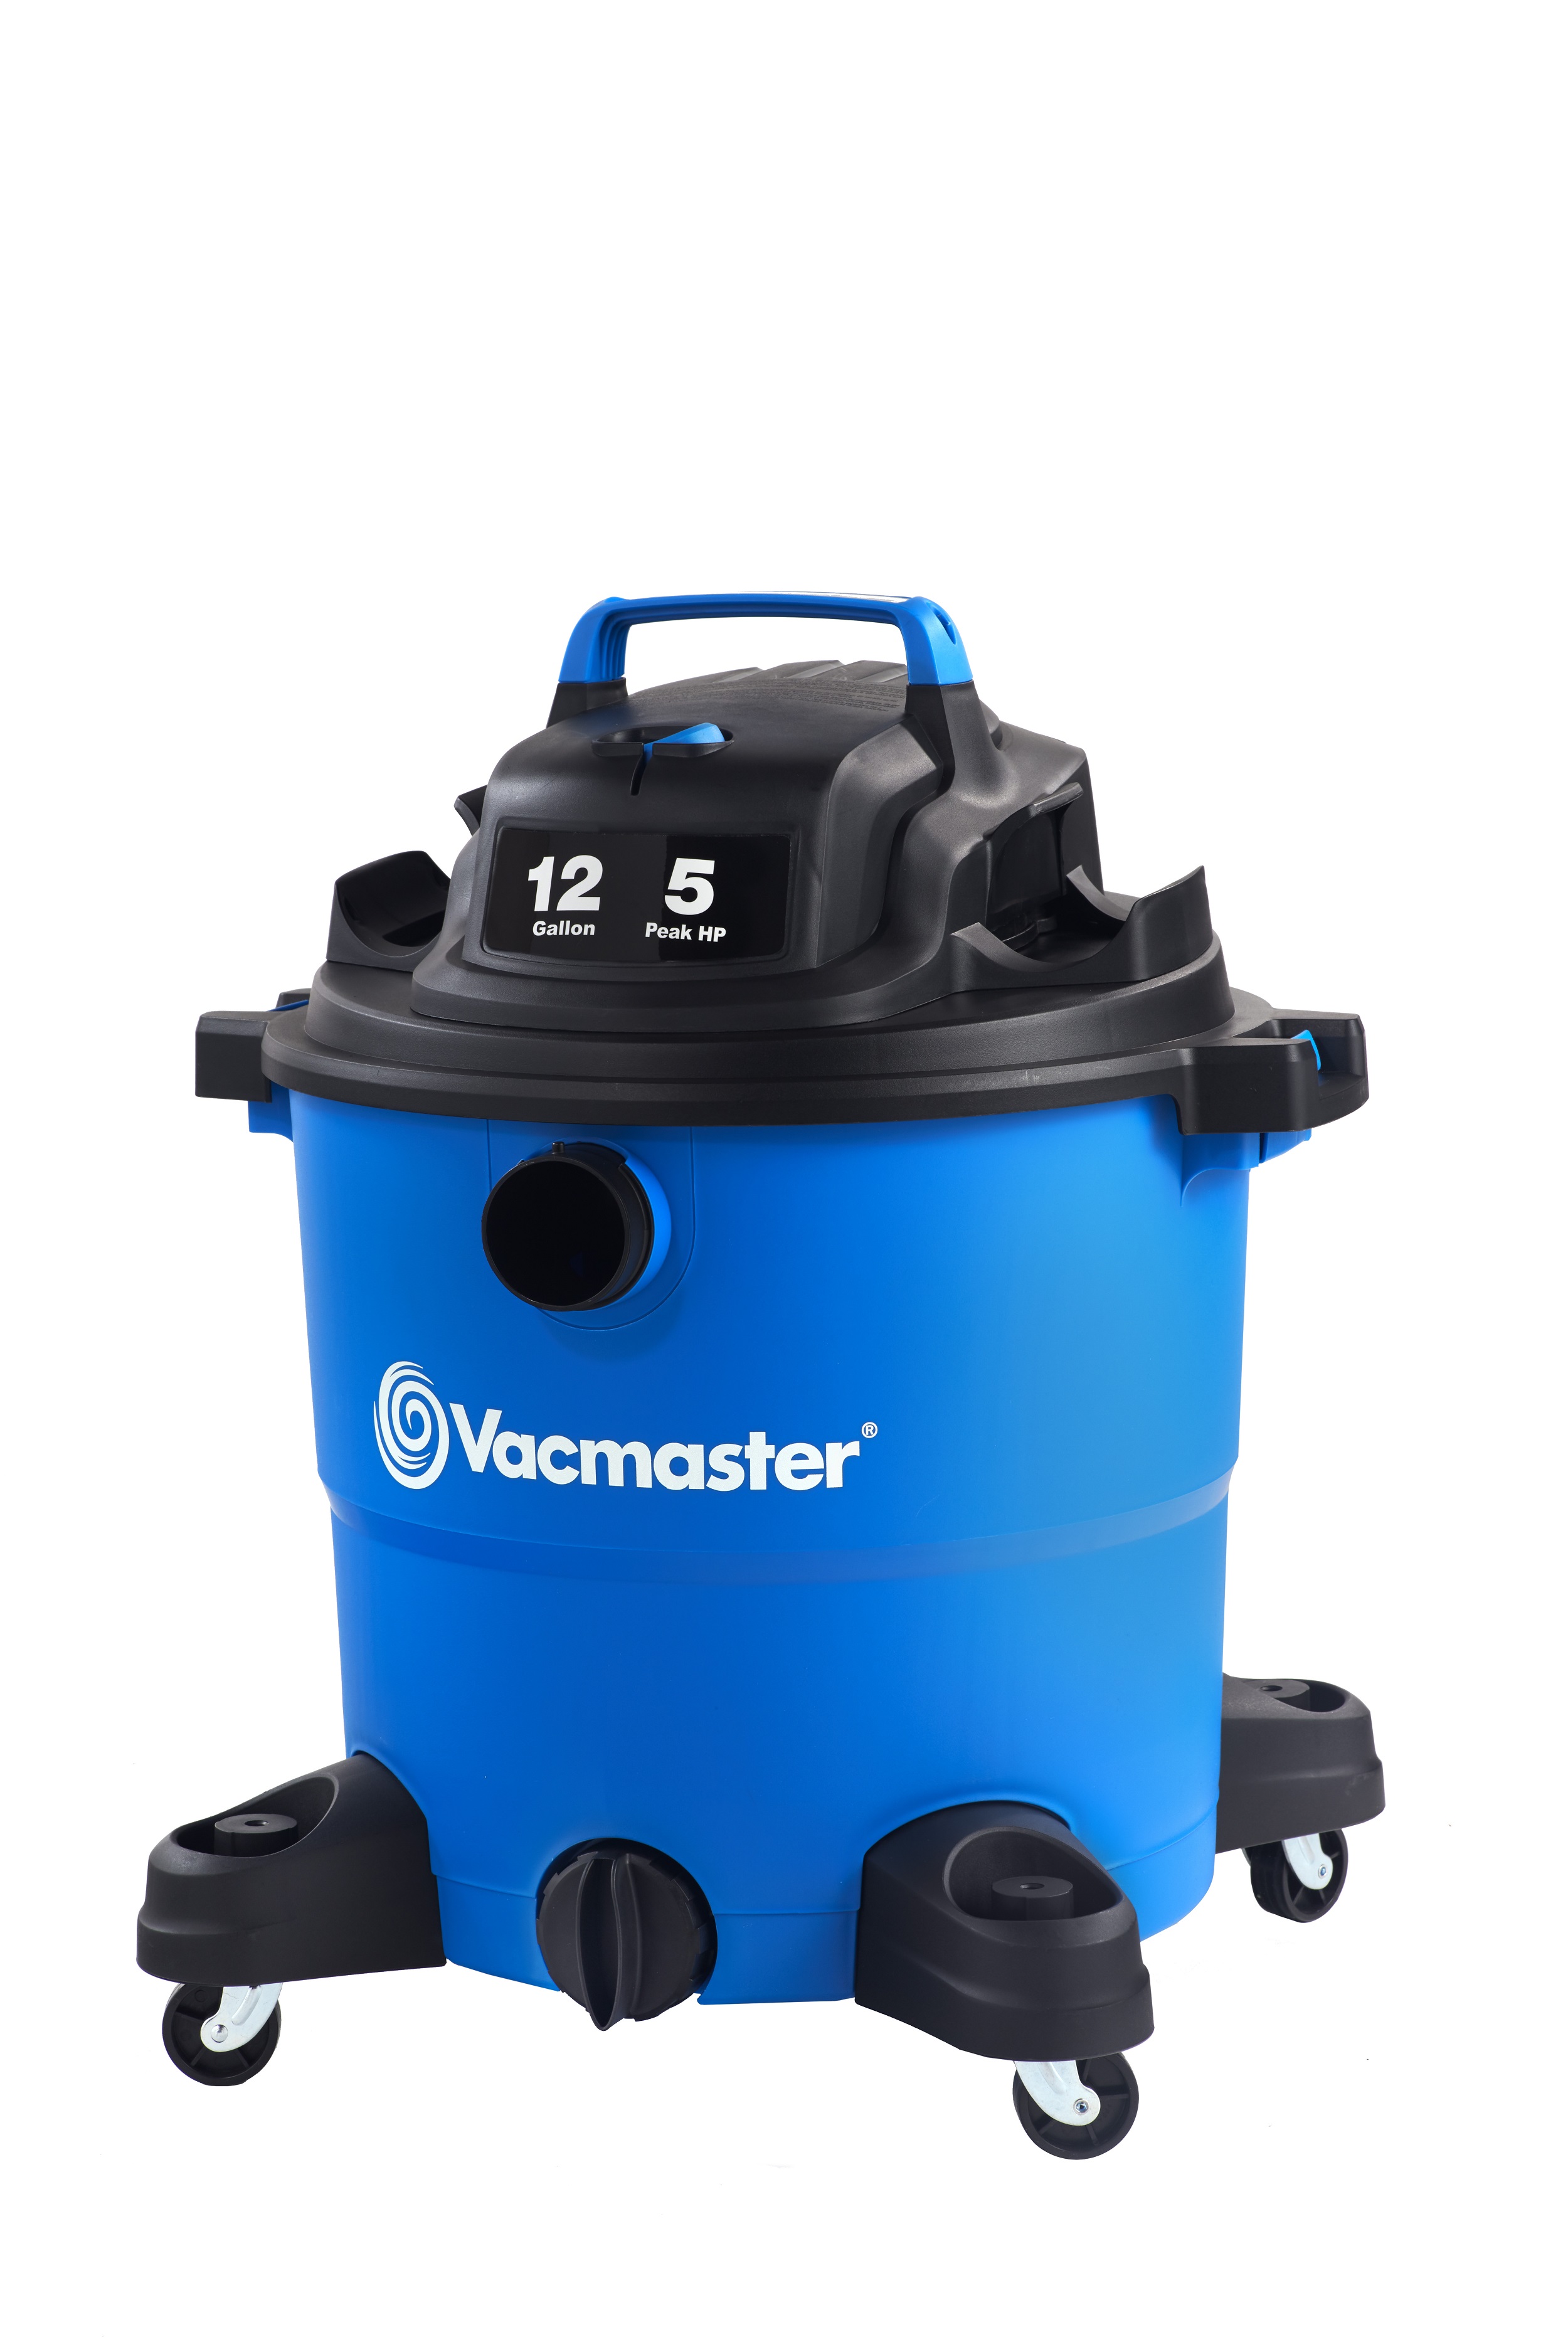 Vacmaster 12 Gallon 5 Peak HP Poly Wet/Dry Vacuum, VOC1210PF - image 3 of 16